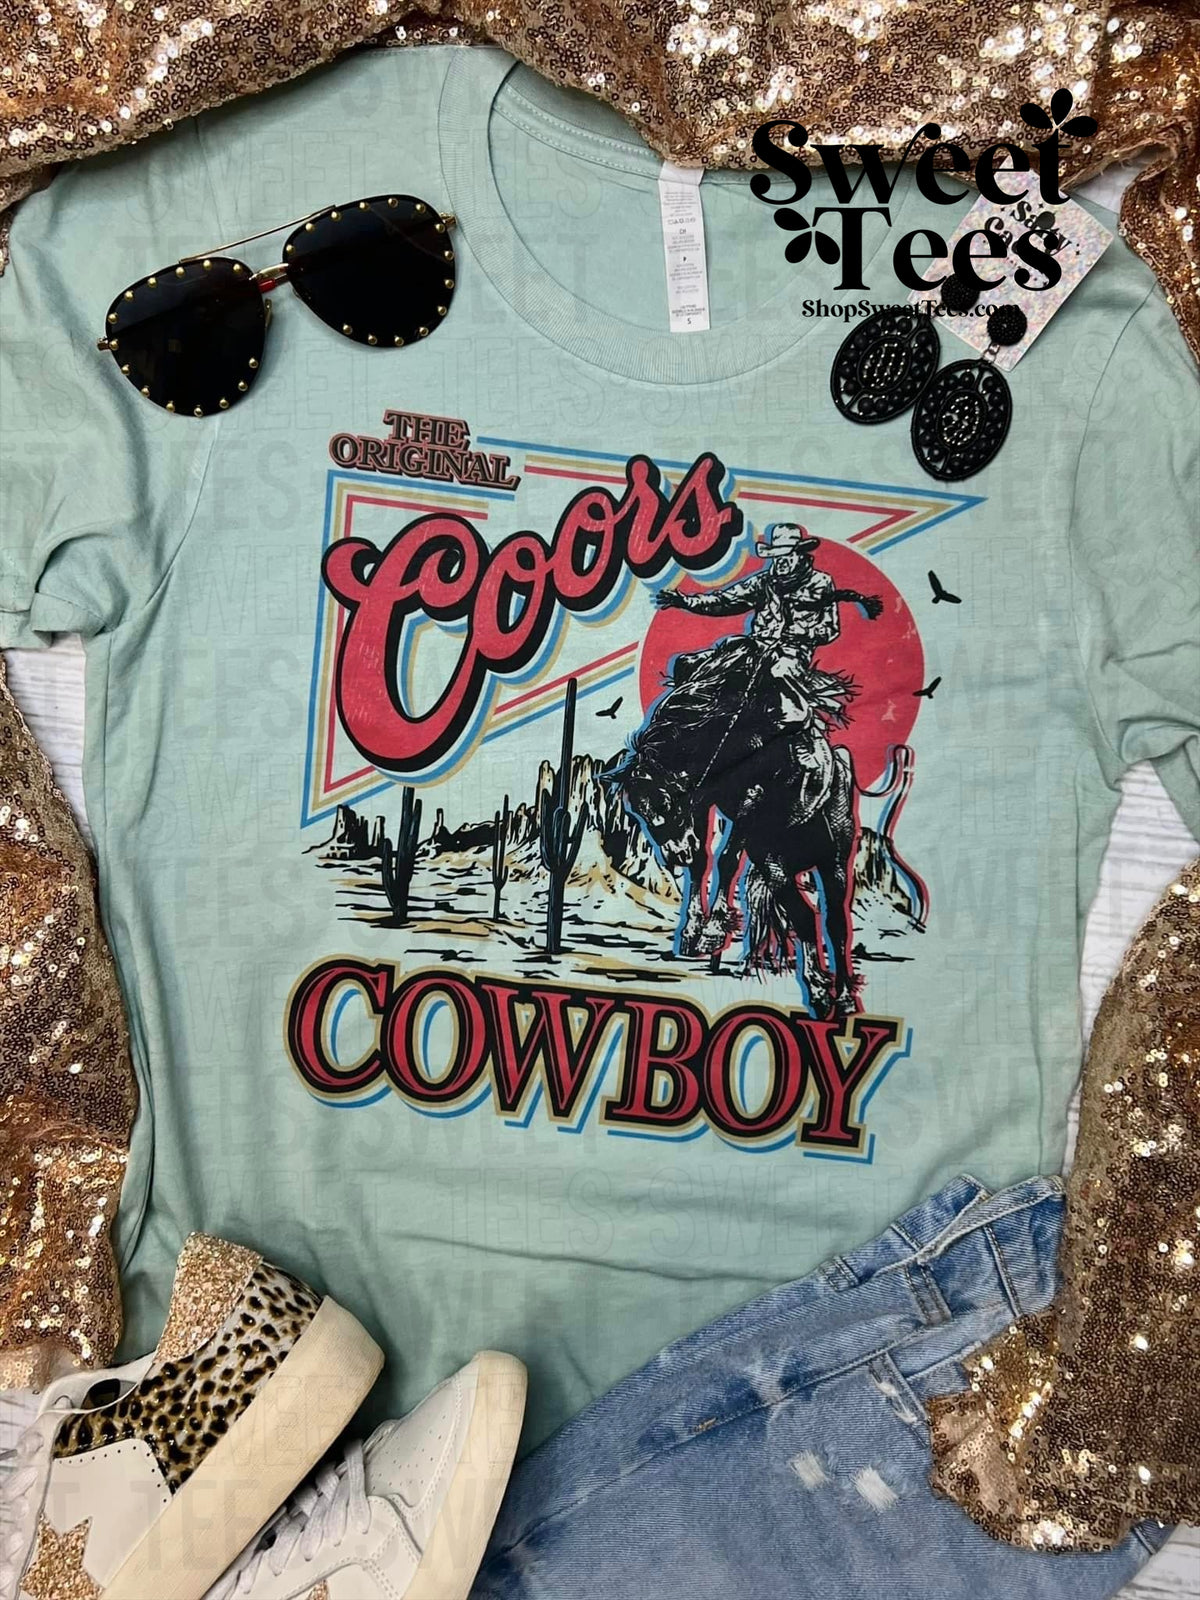 Coors Cowboy tee